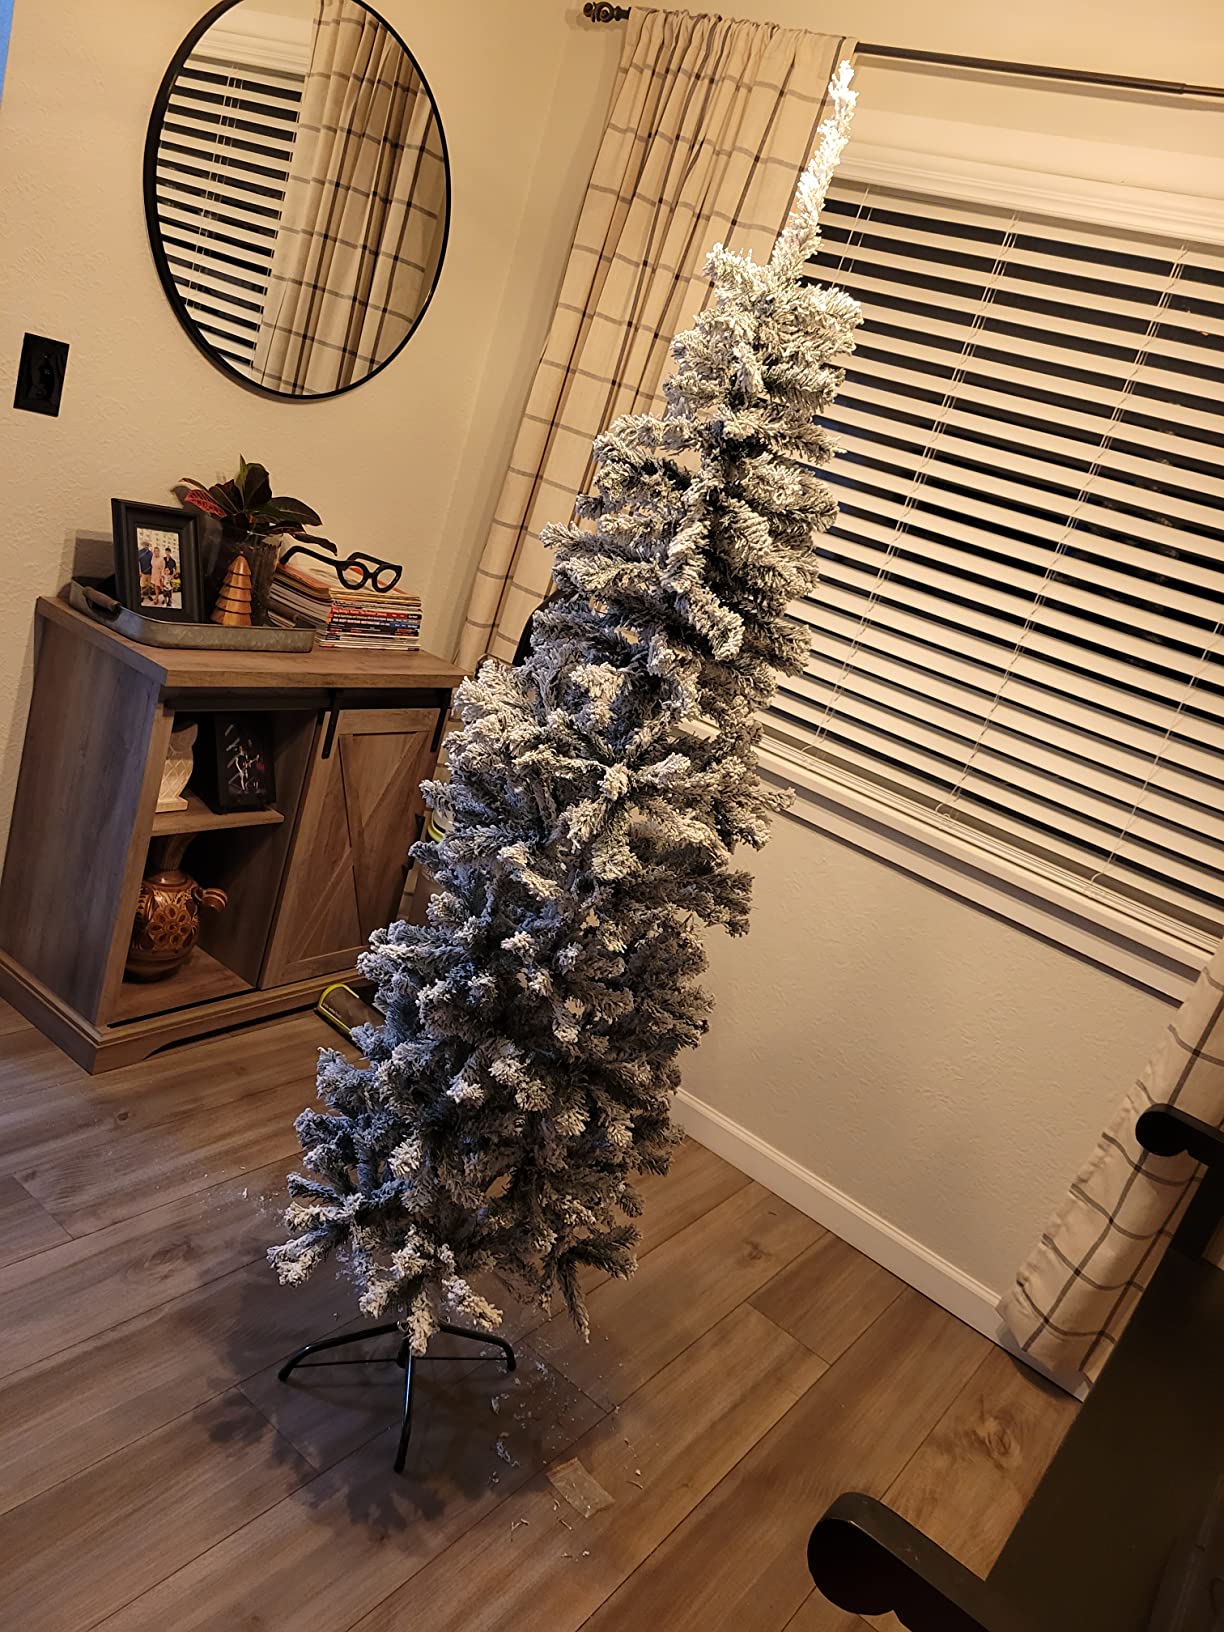 Well priced Christmas tree!